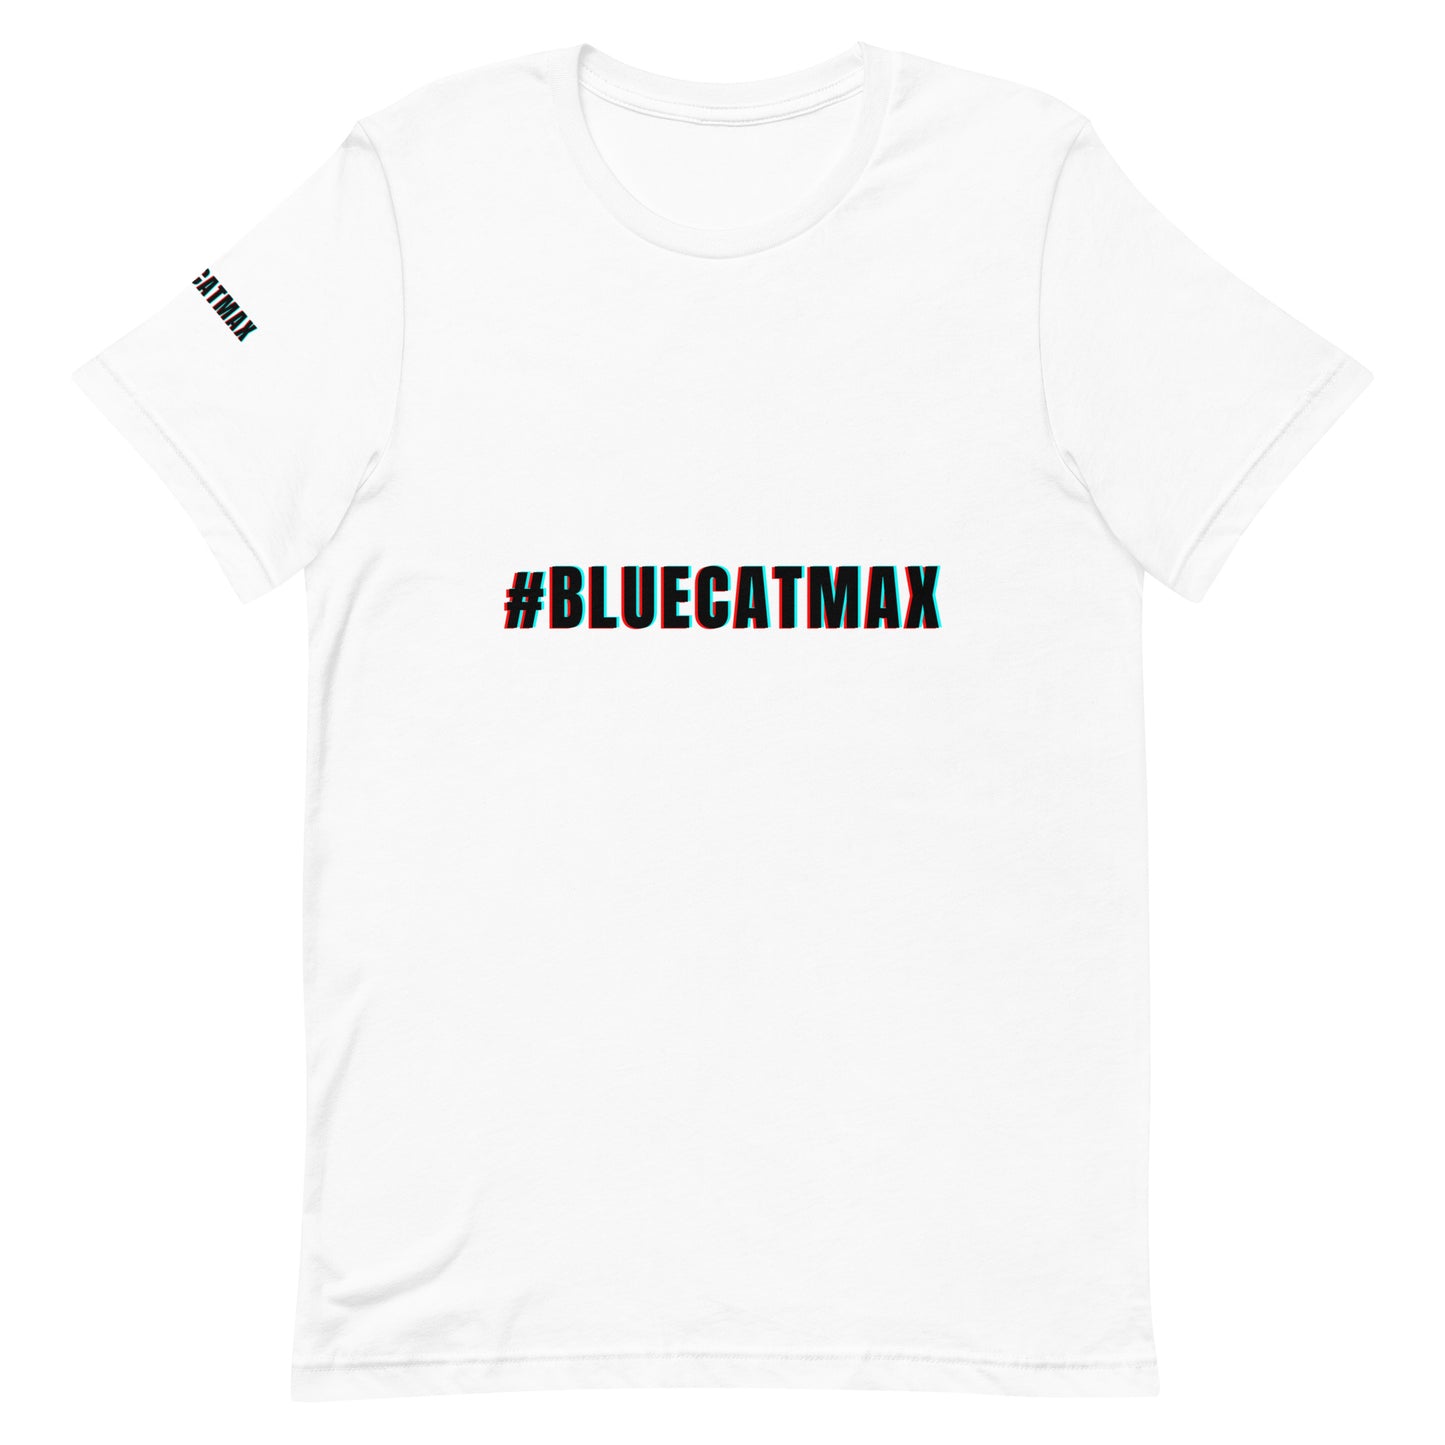 #bluecatmax Bestseller Short-Sleeve Unisex Plus Size T-Shirt XS-5XL